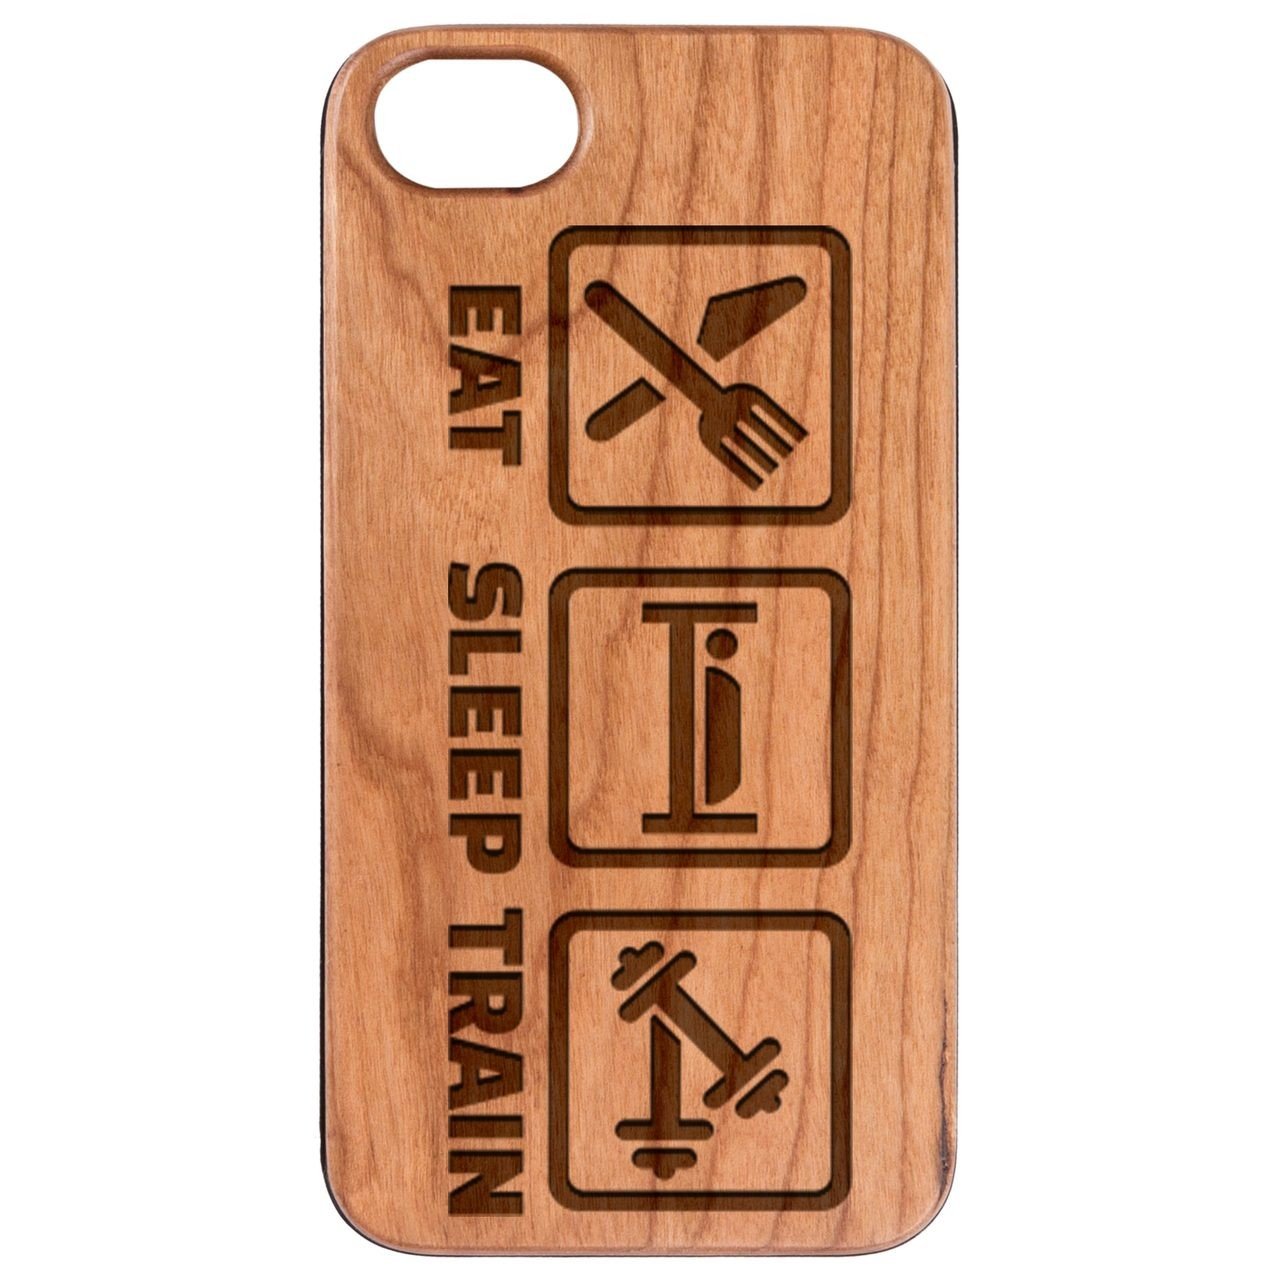 Eat Sleep Train - Engraved - Wooden Phone Case